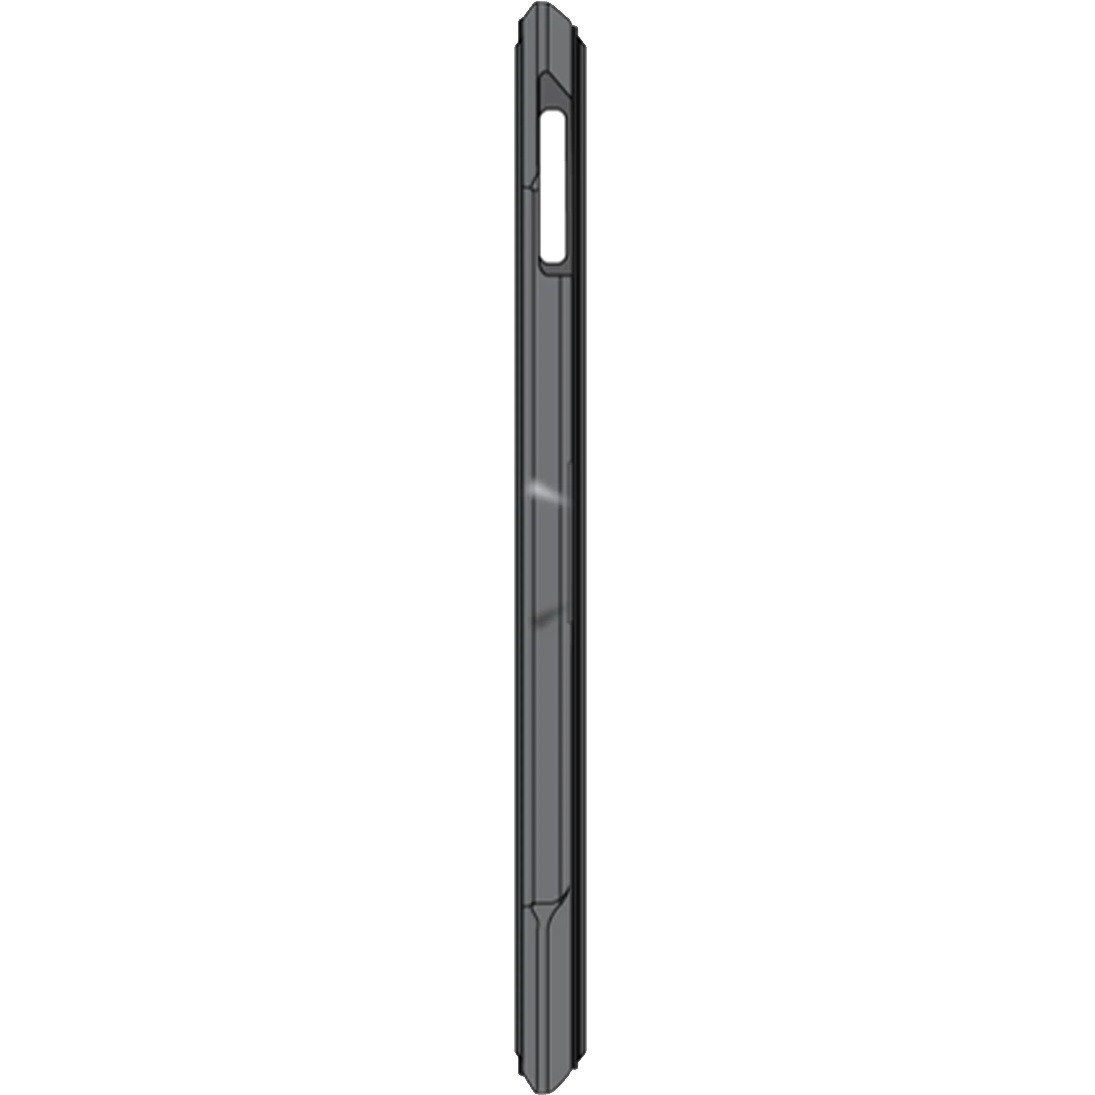 Targus Pro-Tek THZ913GL Carrying Case (Flip) for 8.3" Apple iPad mini (6th Generation) Tablet - Black